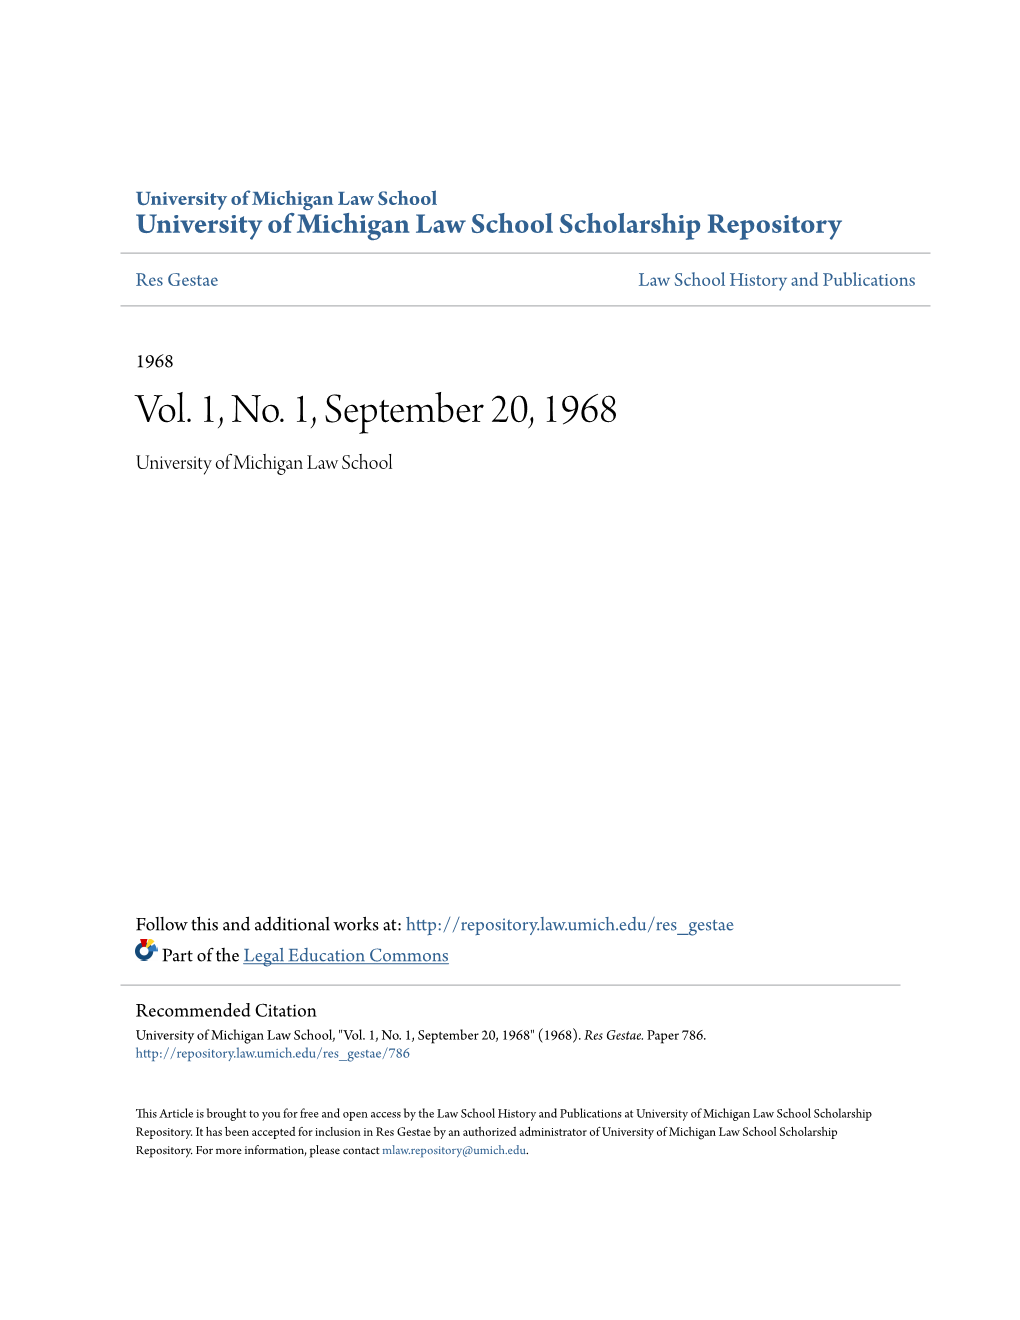 Vol. 1, No. 1, September 20, 1968 University of Michigan Law School